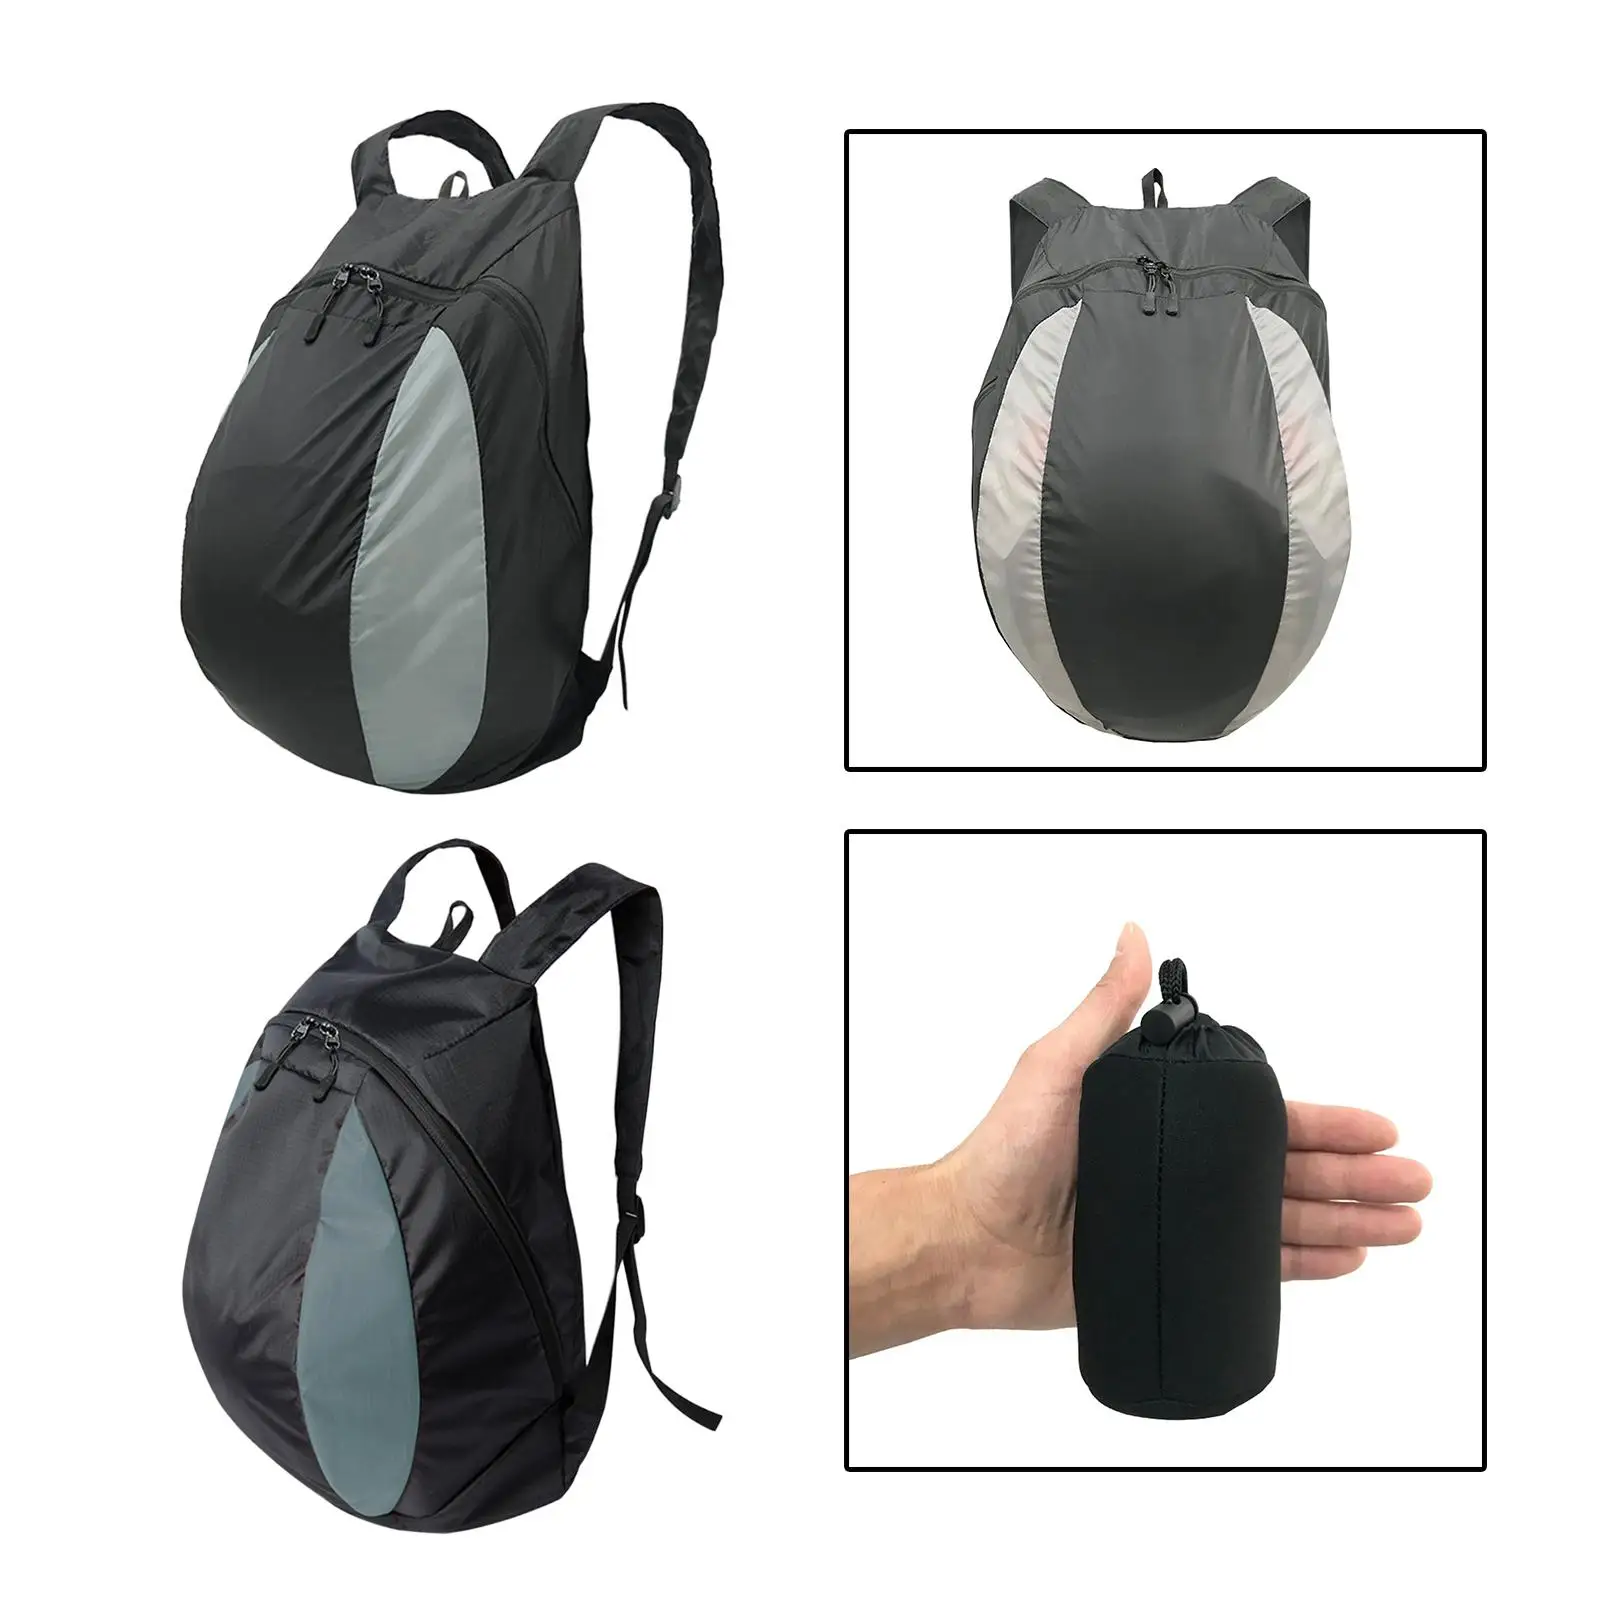 Basketball Backpack Bag Tear Resistant Lightweight Unisex Soccer Storage Bag Holder for Travel Outdoor Activities Sports